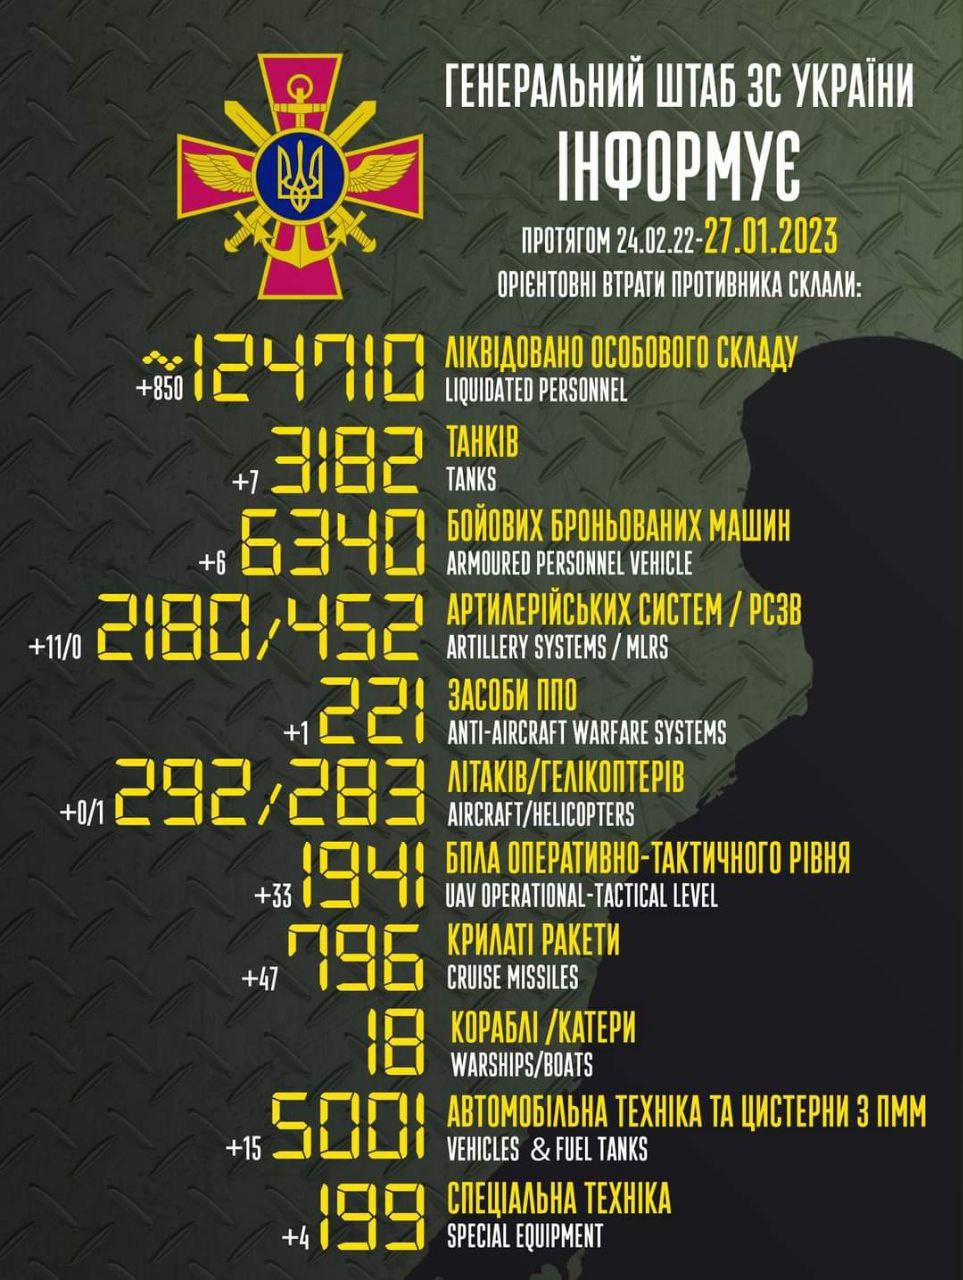 Russia’s losses in Ukraine as of 27/01/2023